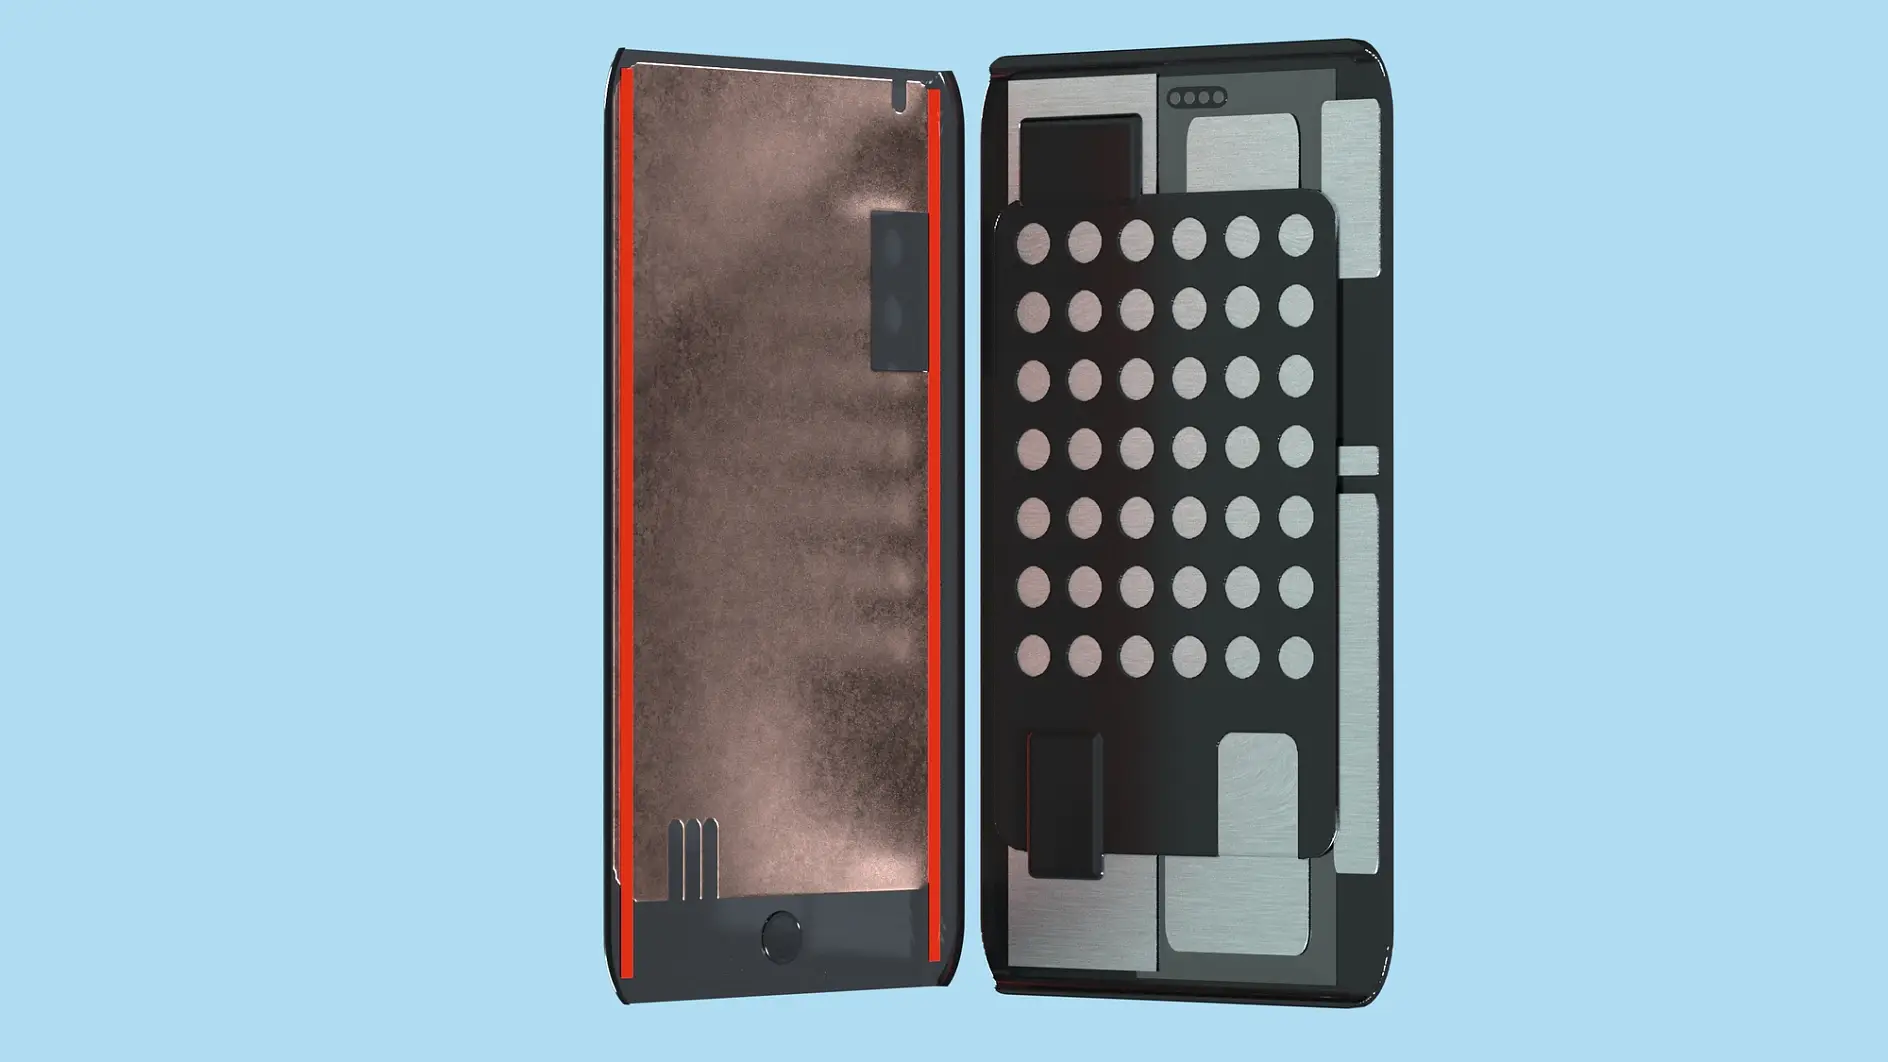 tesa-electronics-smartphone-display-mounting-bottom-illustration